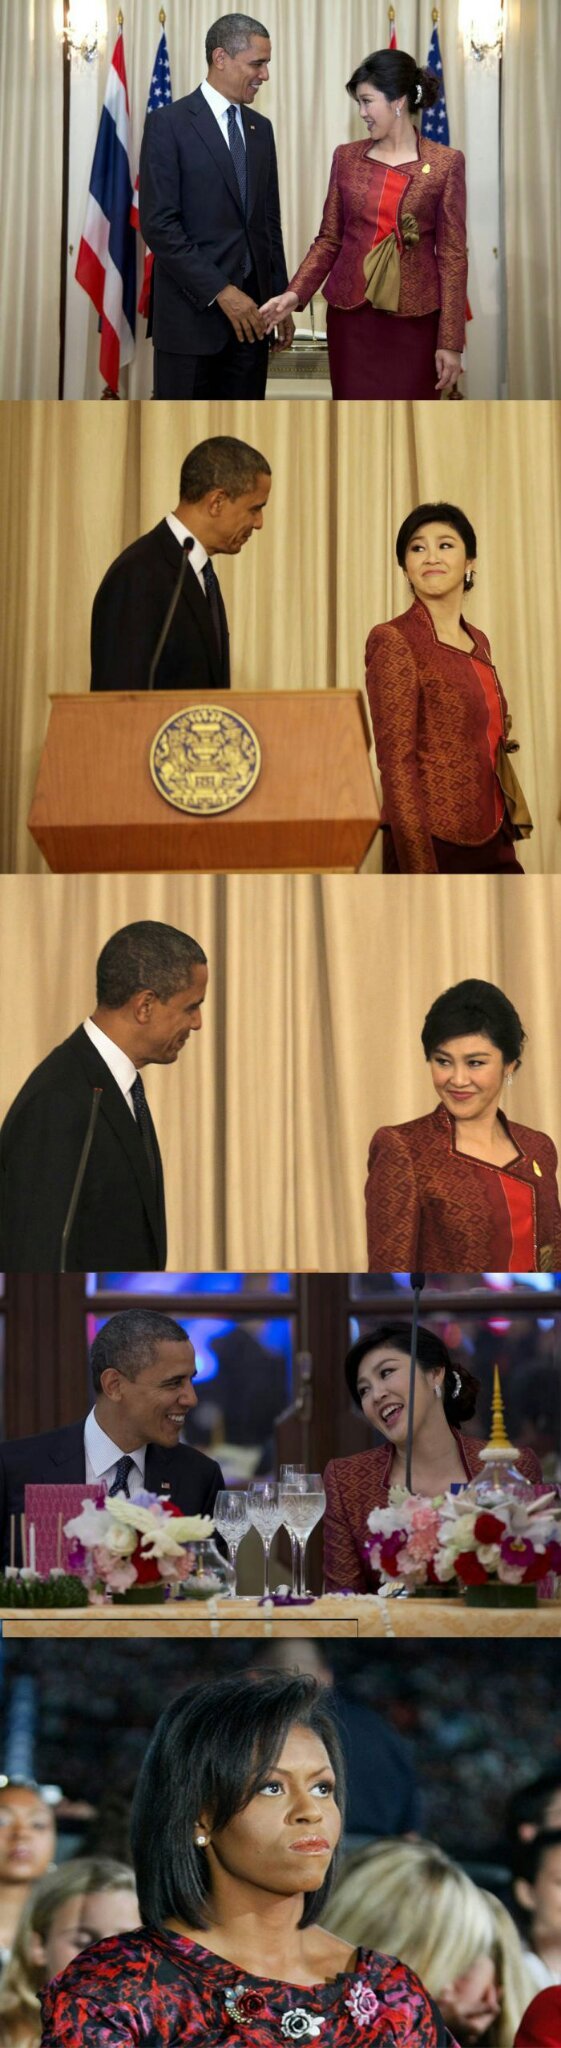 Obama and Thailand's prime minister - meme